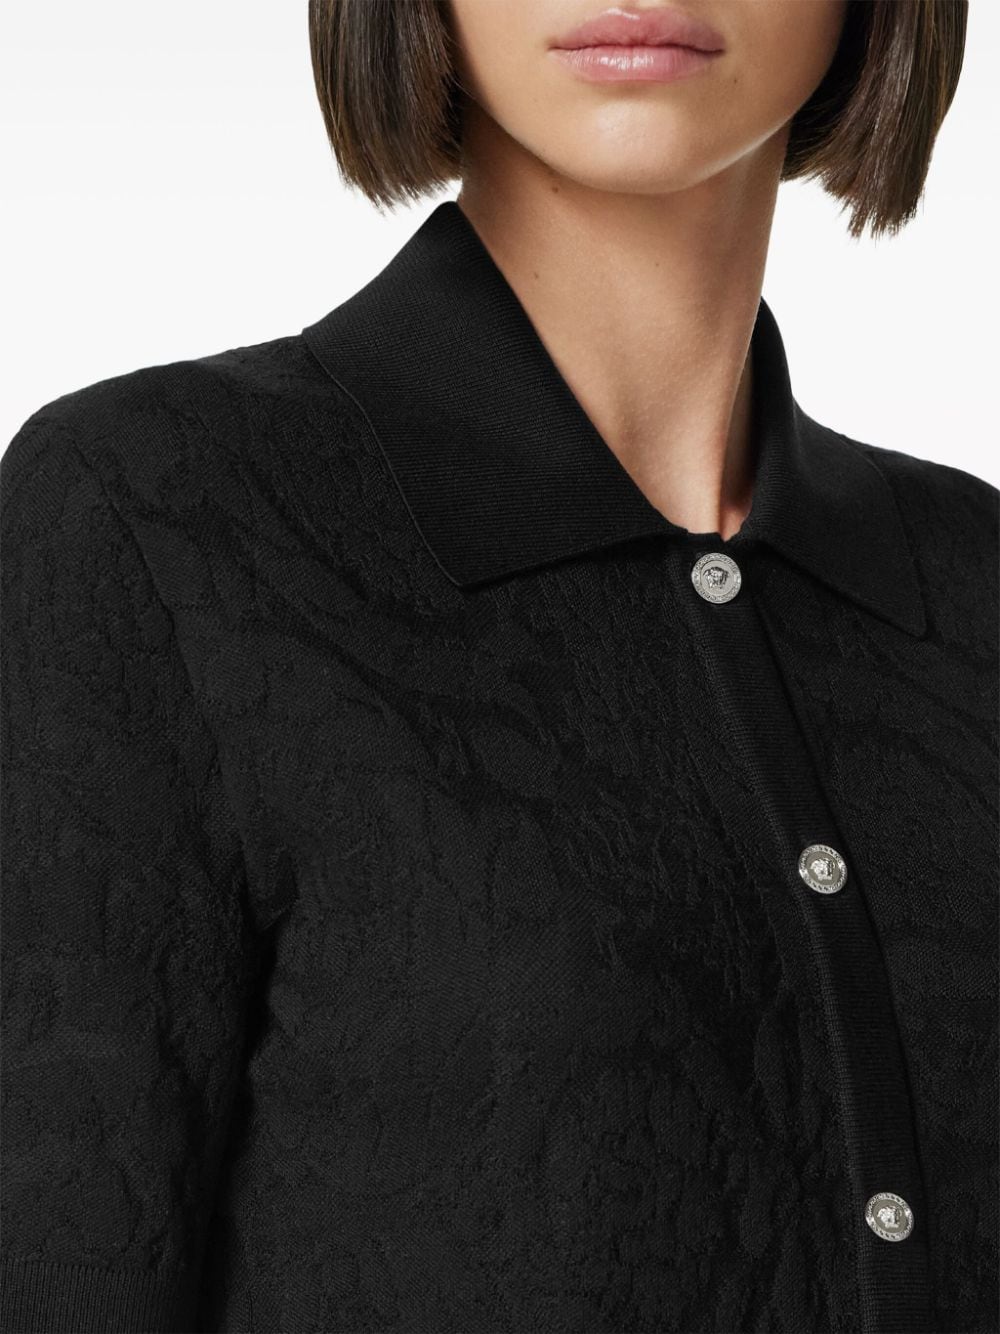 Versace Black Barocco Knit Polo Cardigan